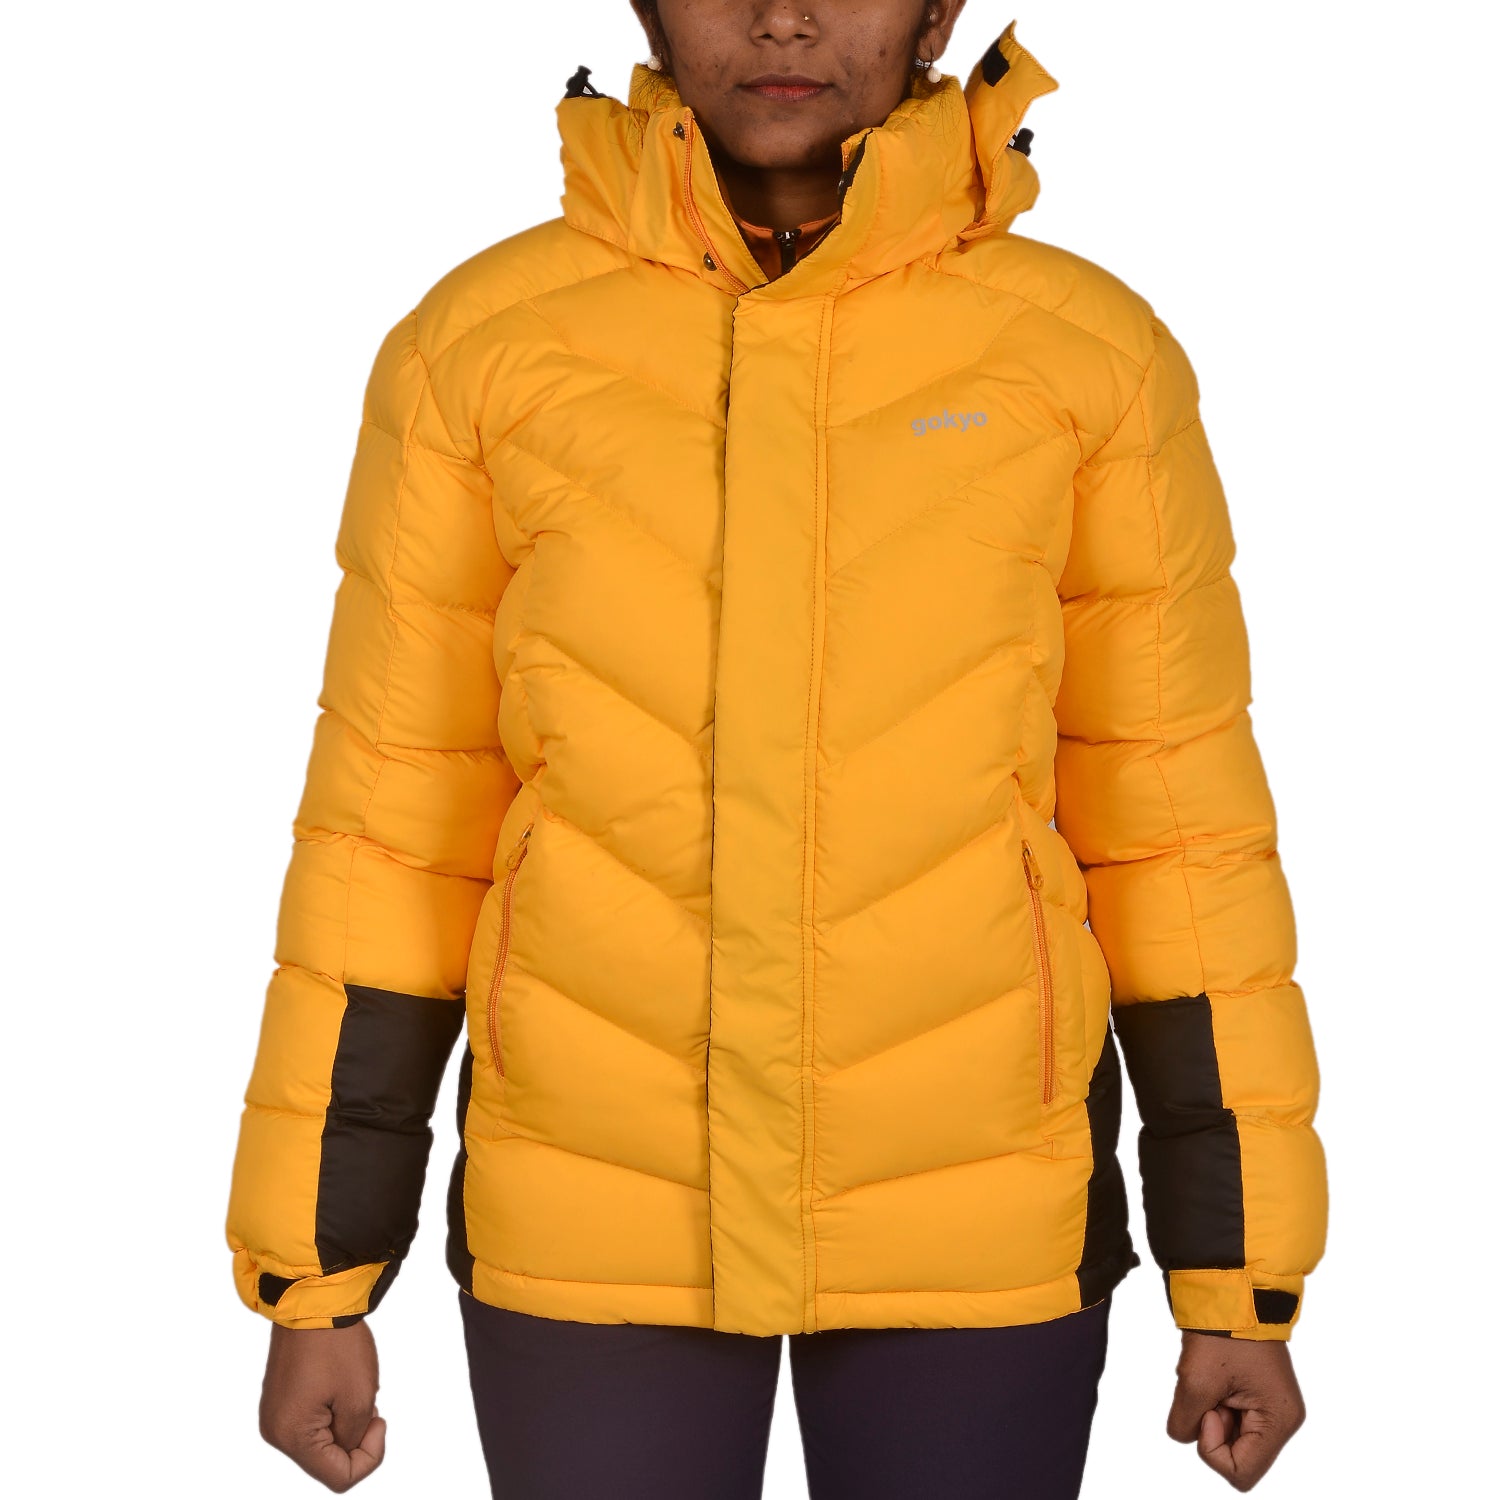 Buy Gokyo K2 Survivor Down Jacket - Women Yellow | Jackets at Gokyo Outdoor Clothing & Gear